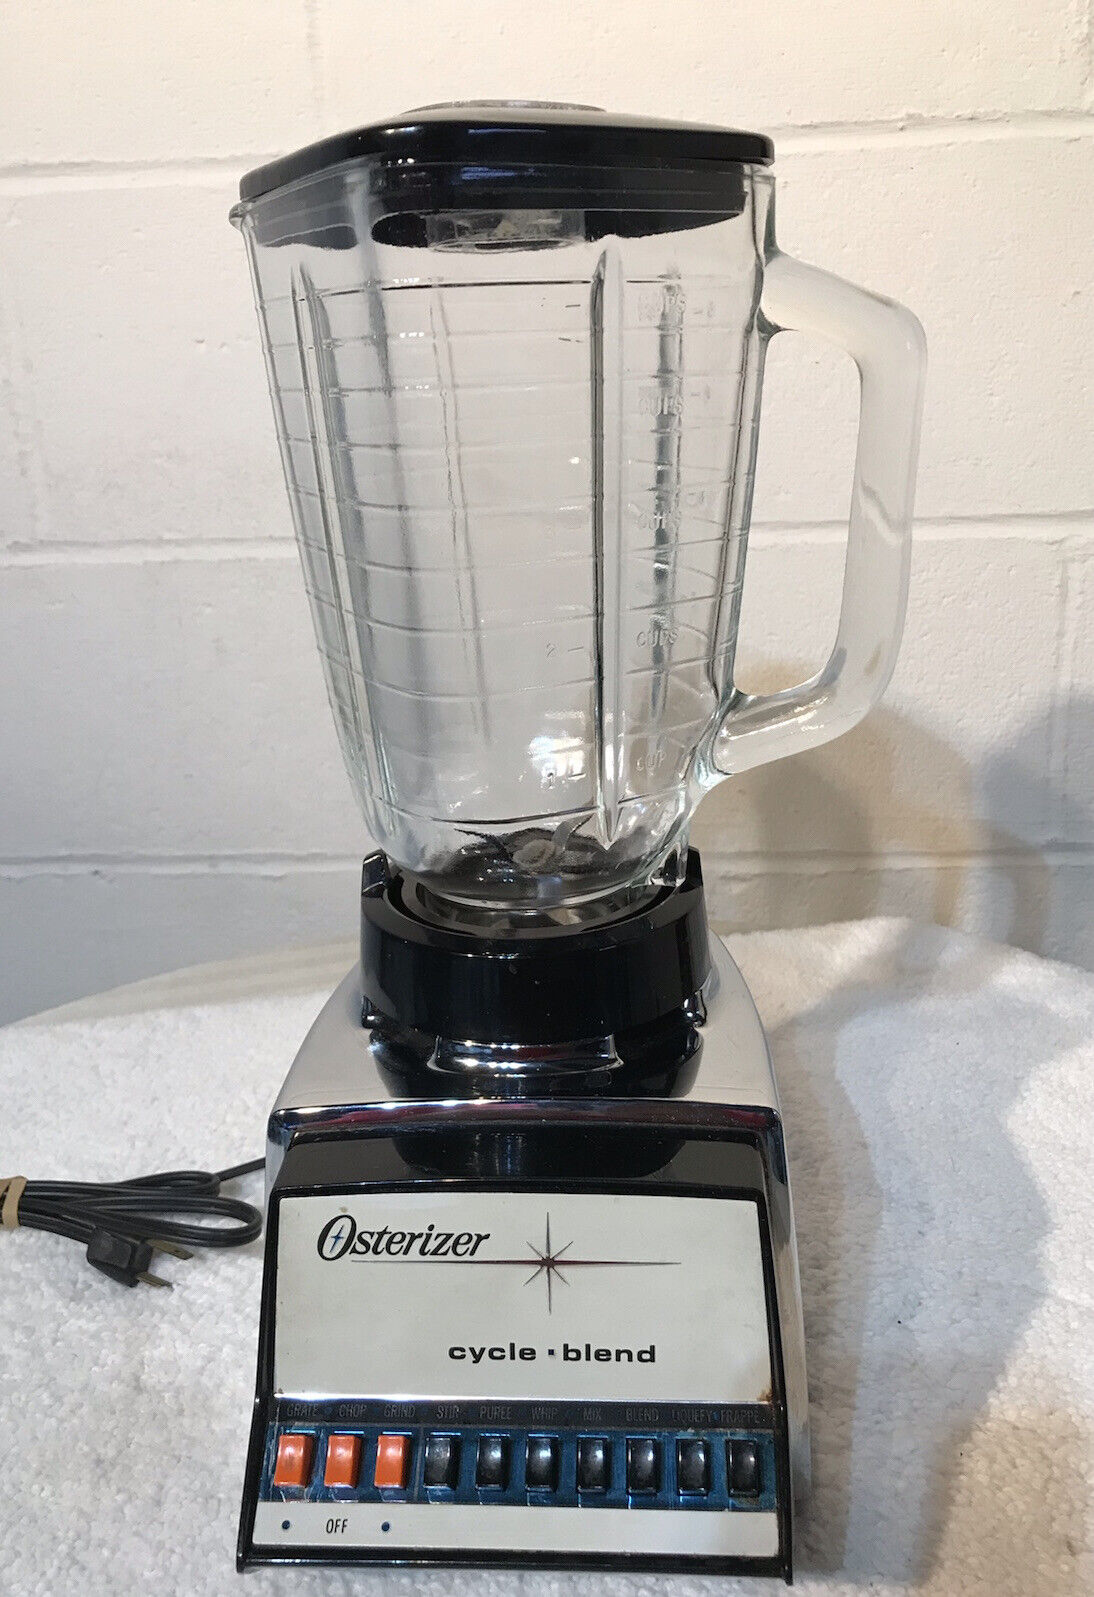 Vtg 10 Speed  Osterizer Blender Cycle Blend 847  Chrome Retro W Glass pitcher